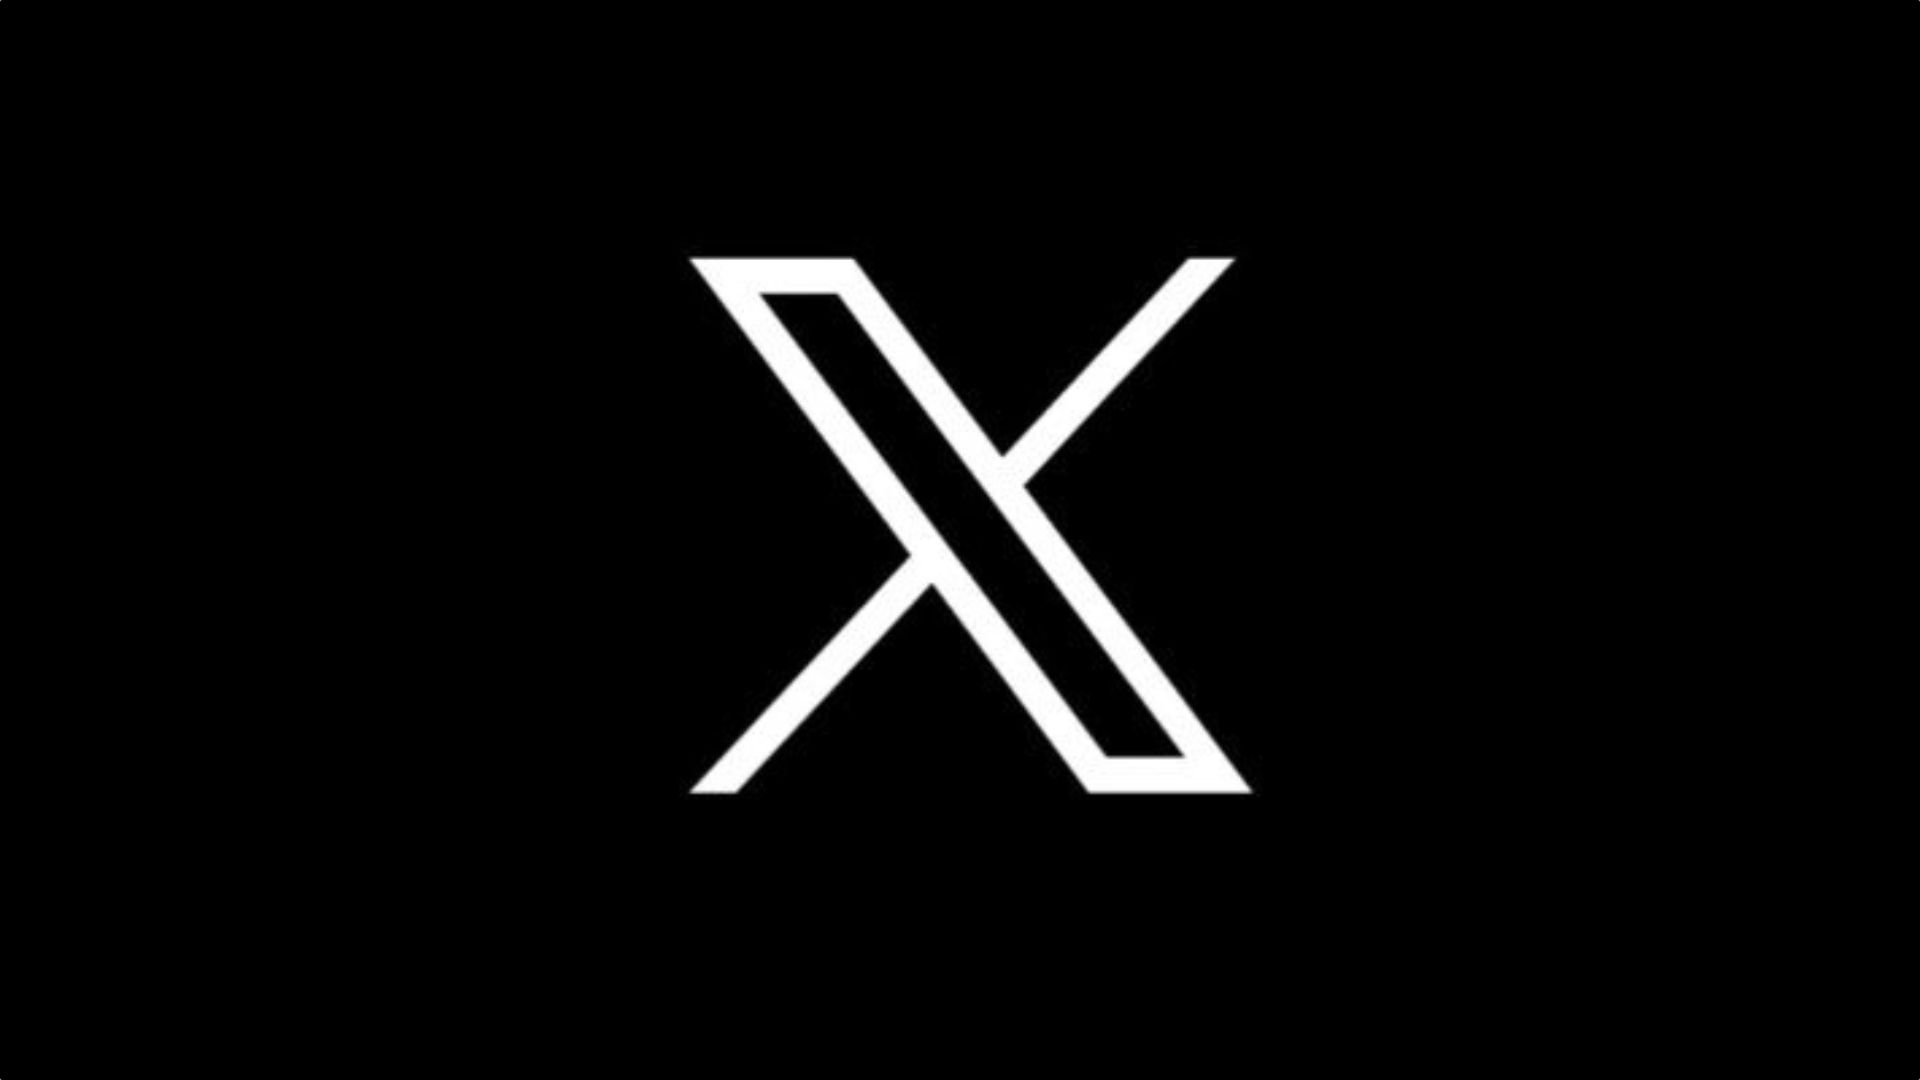 X twitter logo.jpg